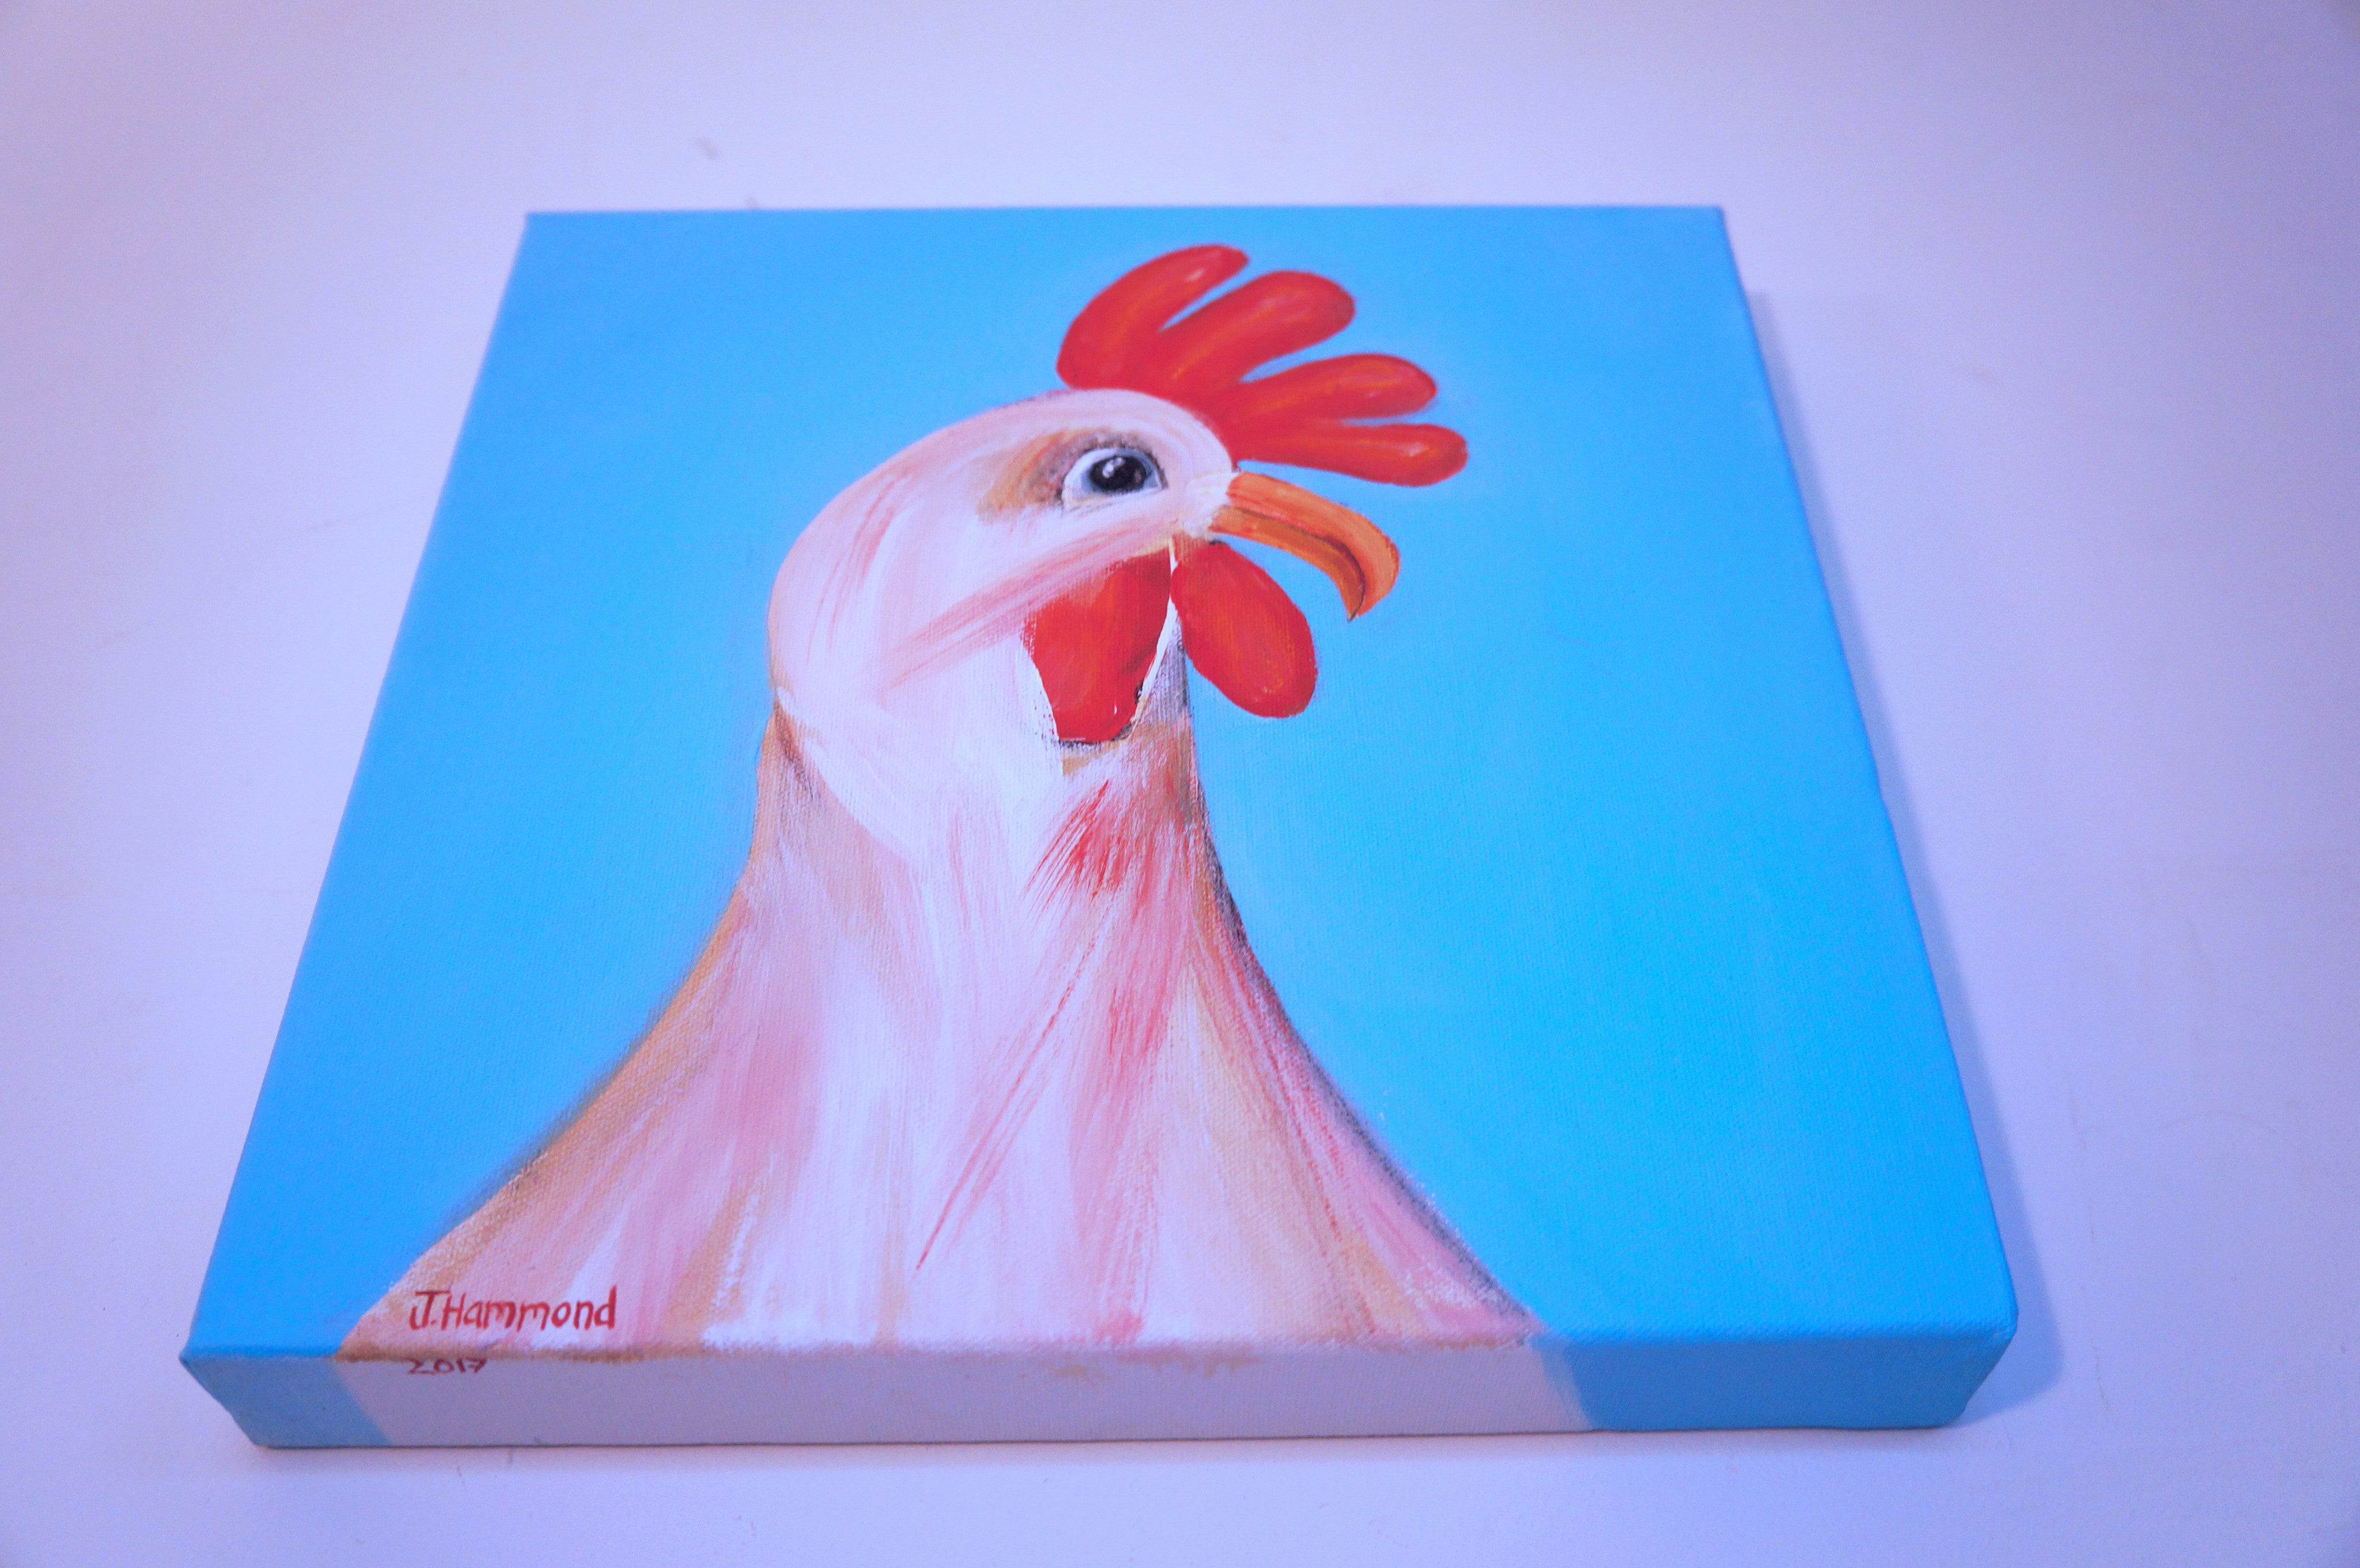 Techno Chicken - Bird Portrait Painting  Smart Deco Homeware Lighting and Art by Jacqueline hammond